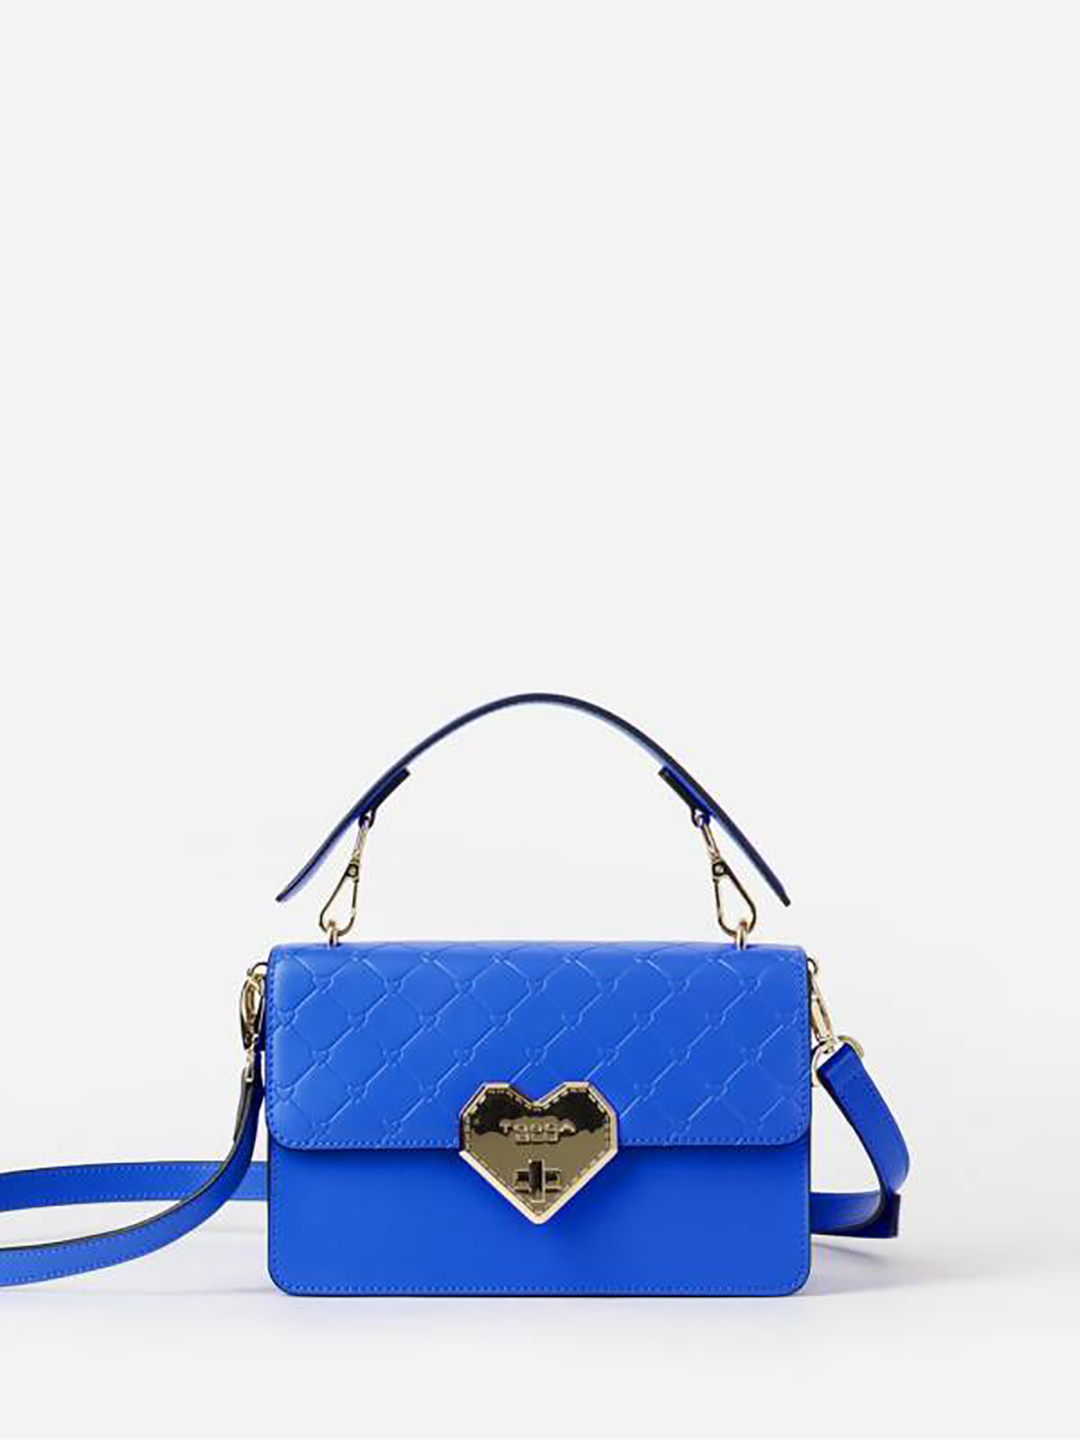 Blu сумки. Tosca Blu сумка кросс-боди. Tosca Blu сумка голубая. Сумка Tosca Blu женская голубая. Tosca Blu сумка ярко синяя.